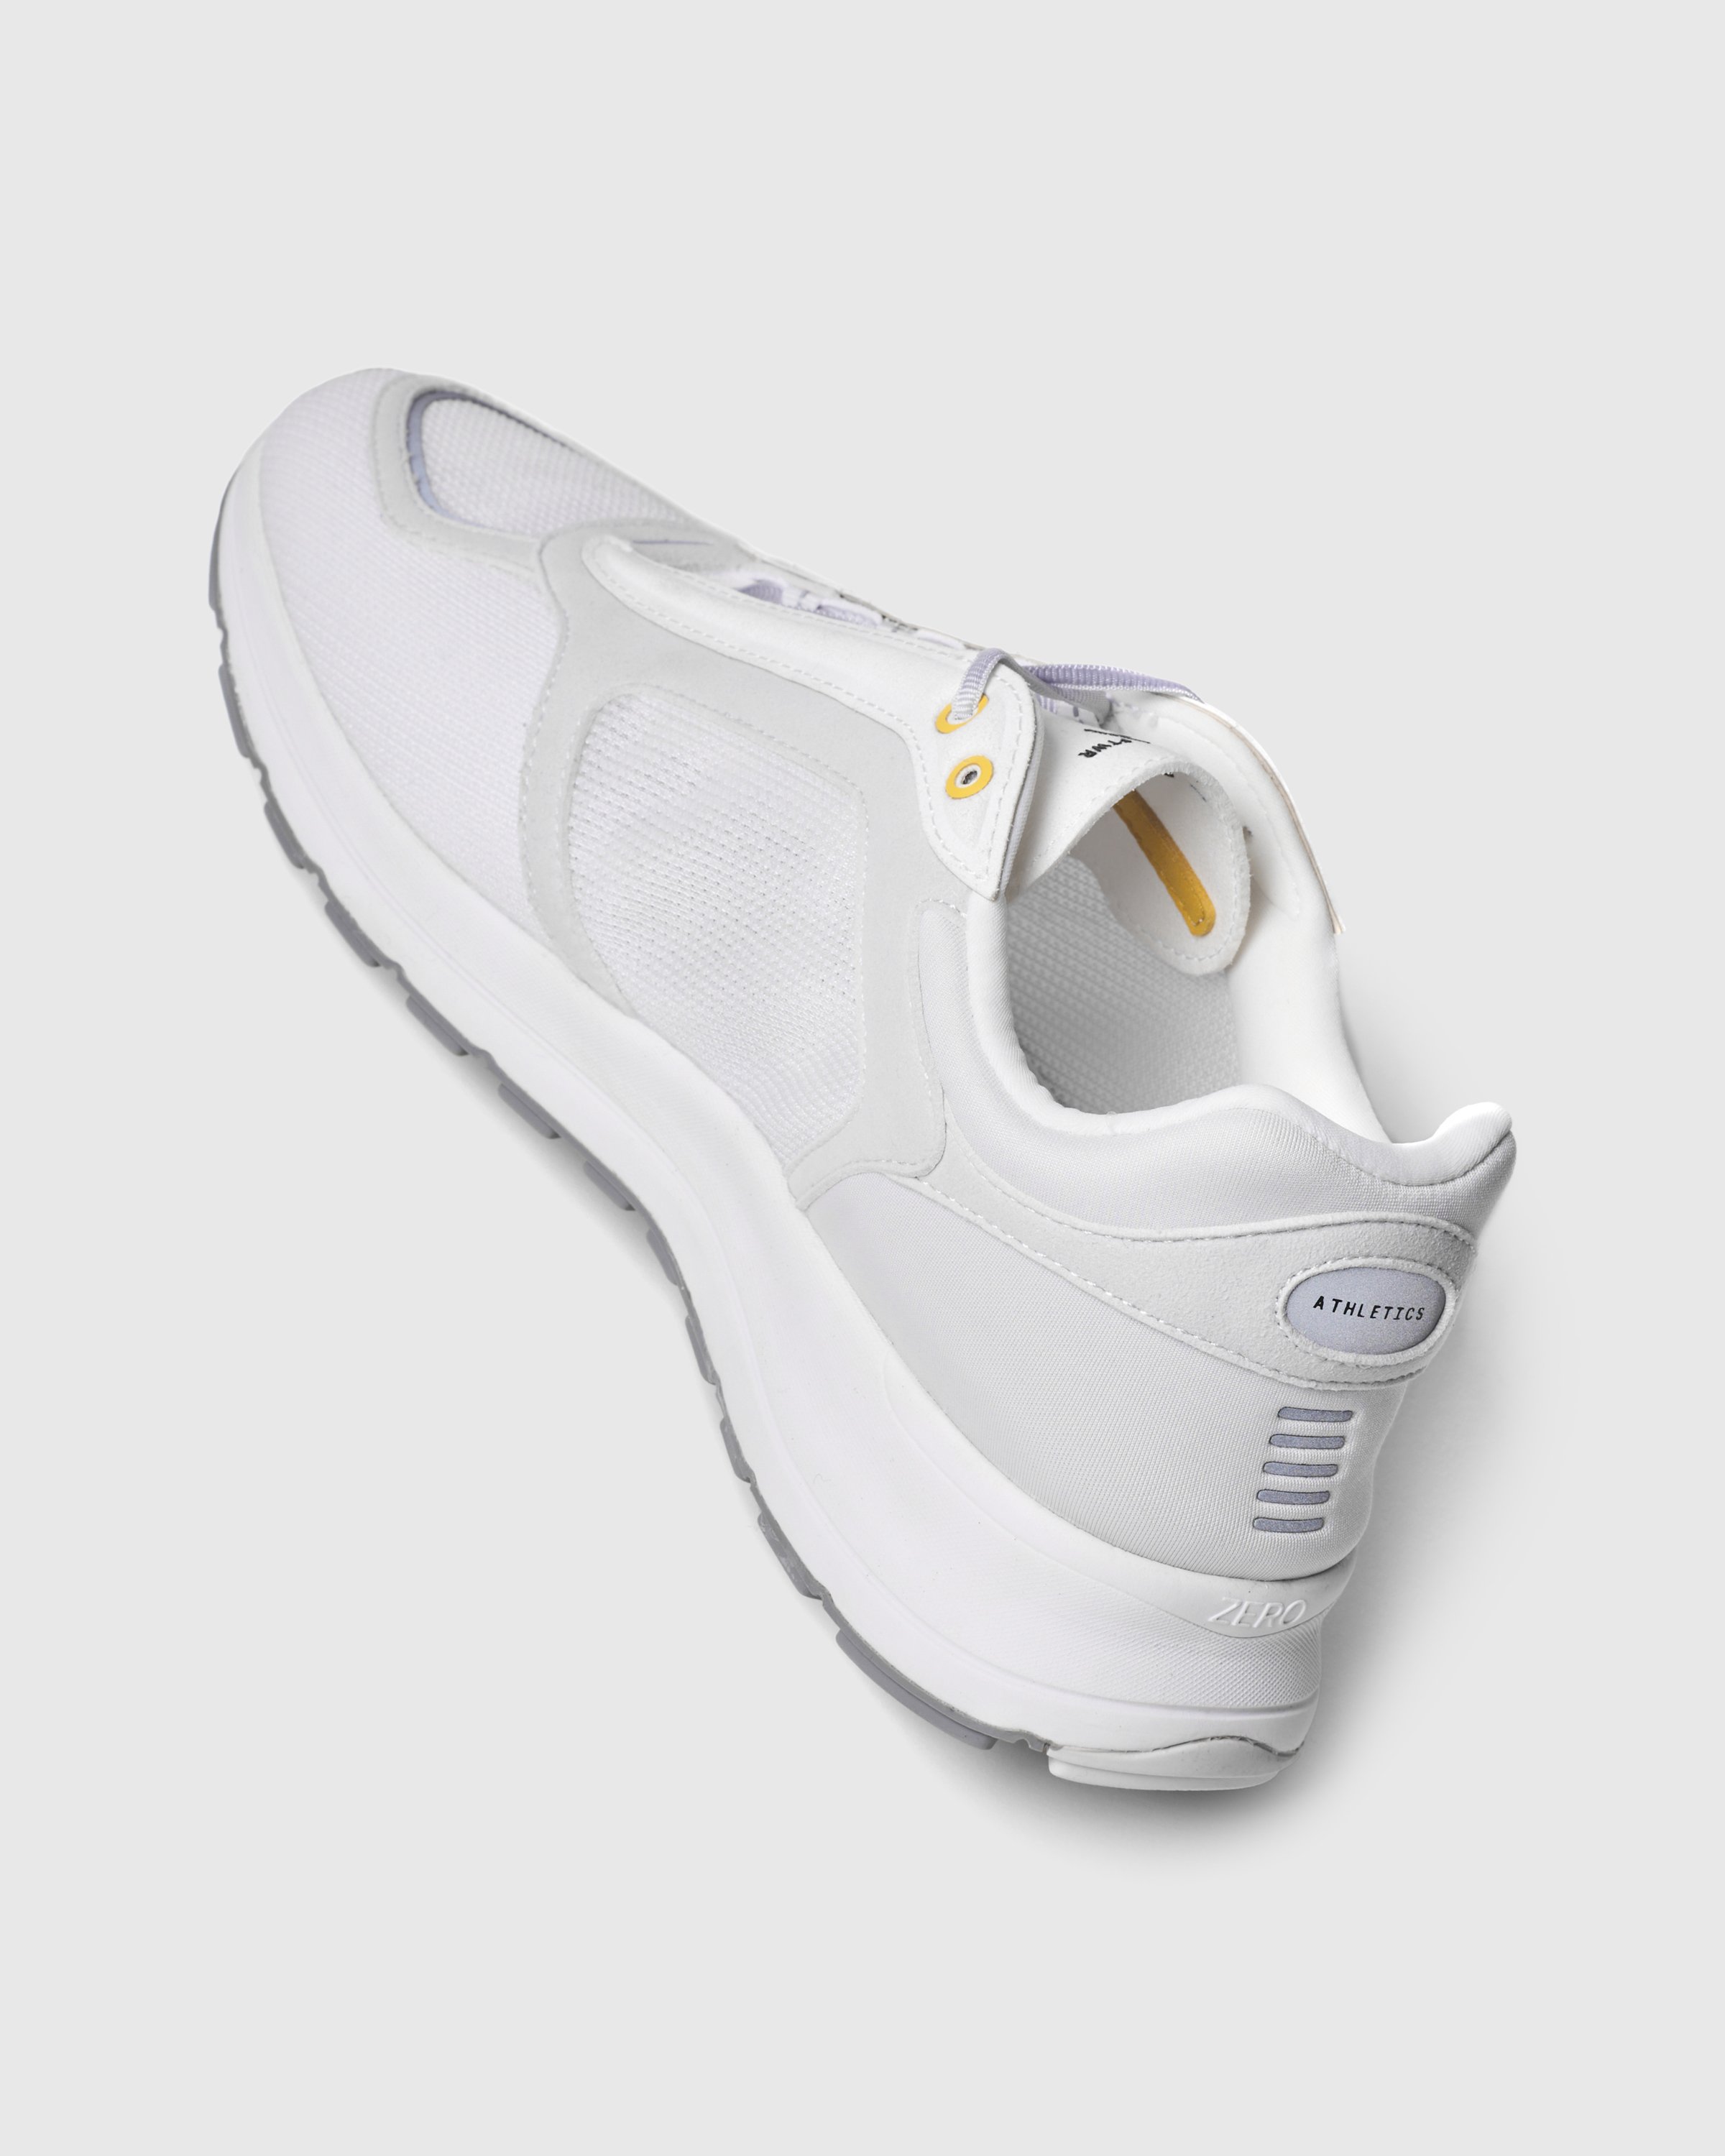 Athletics Footwear - Zero V1 White - Footwear - White - Image 4